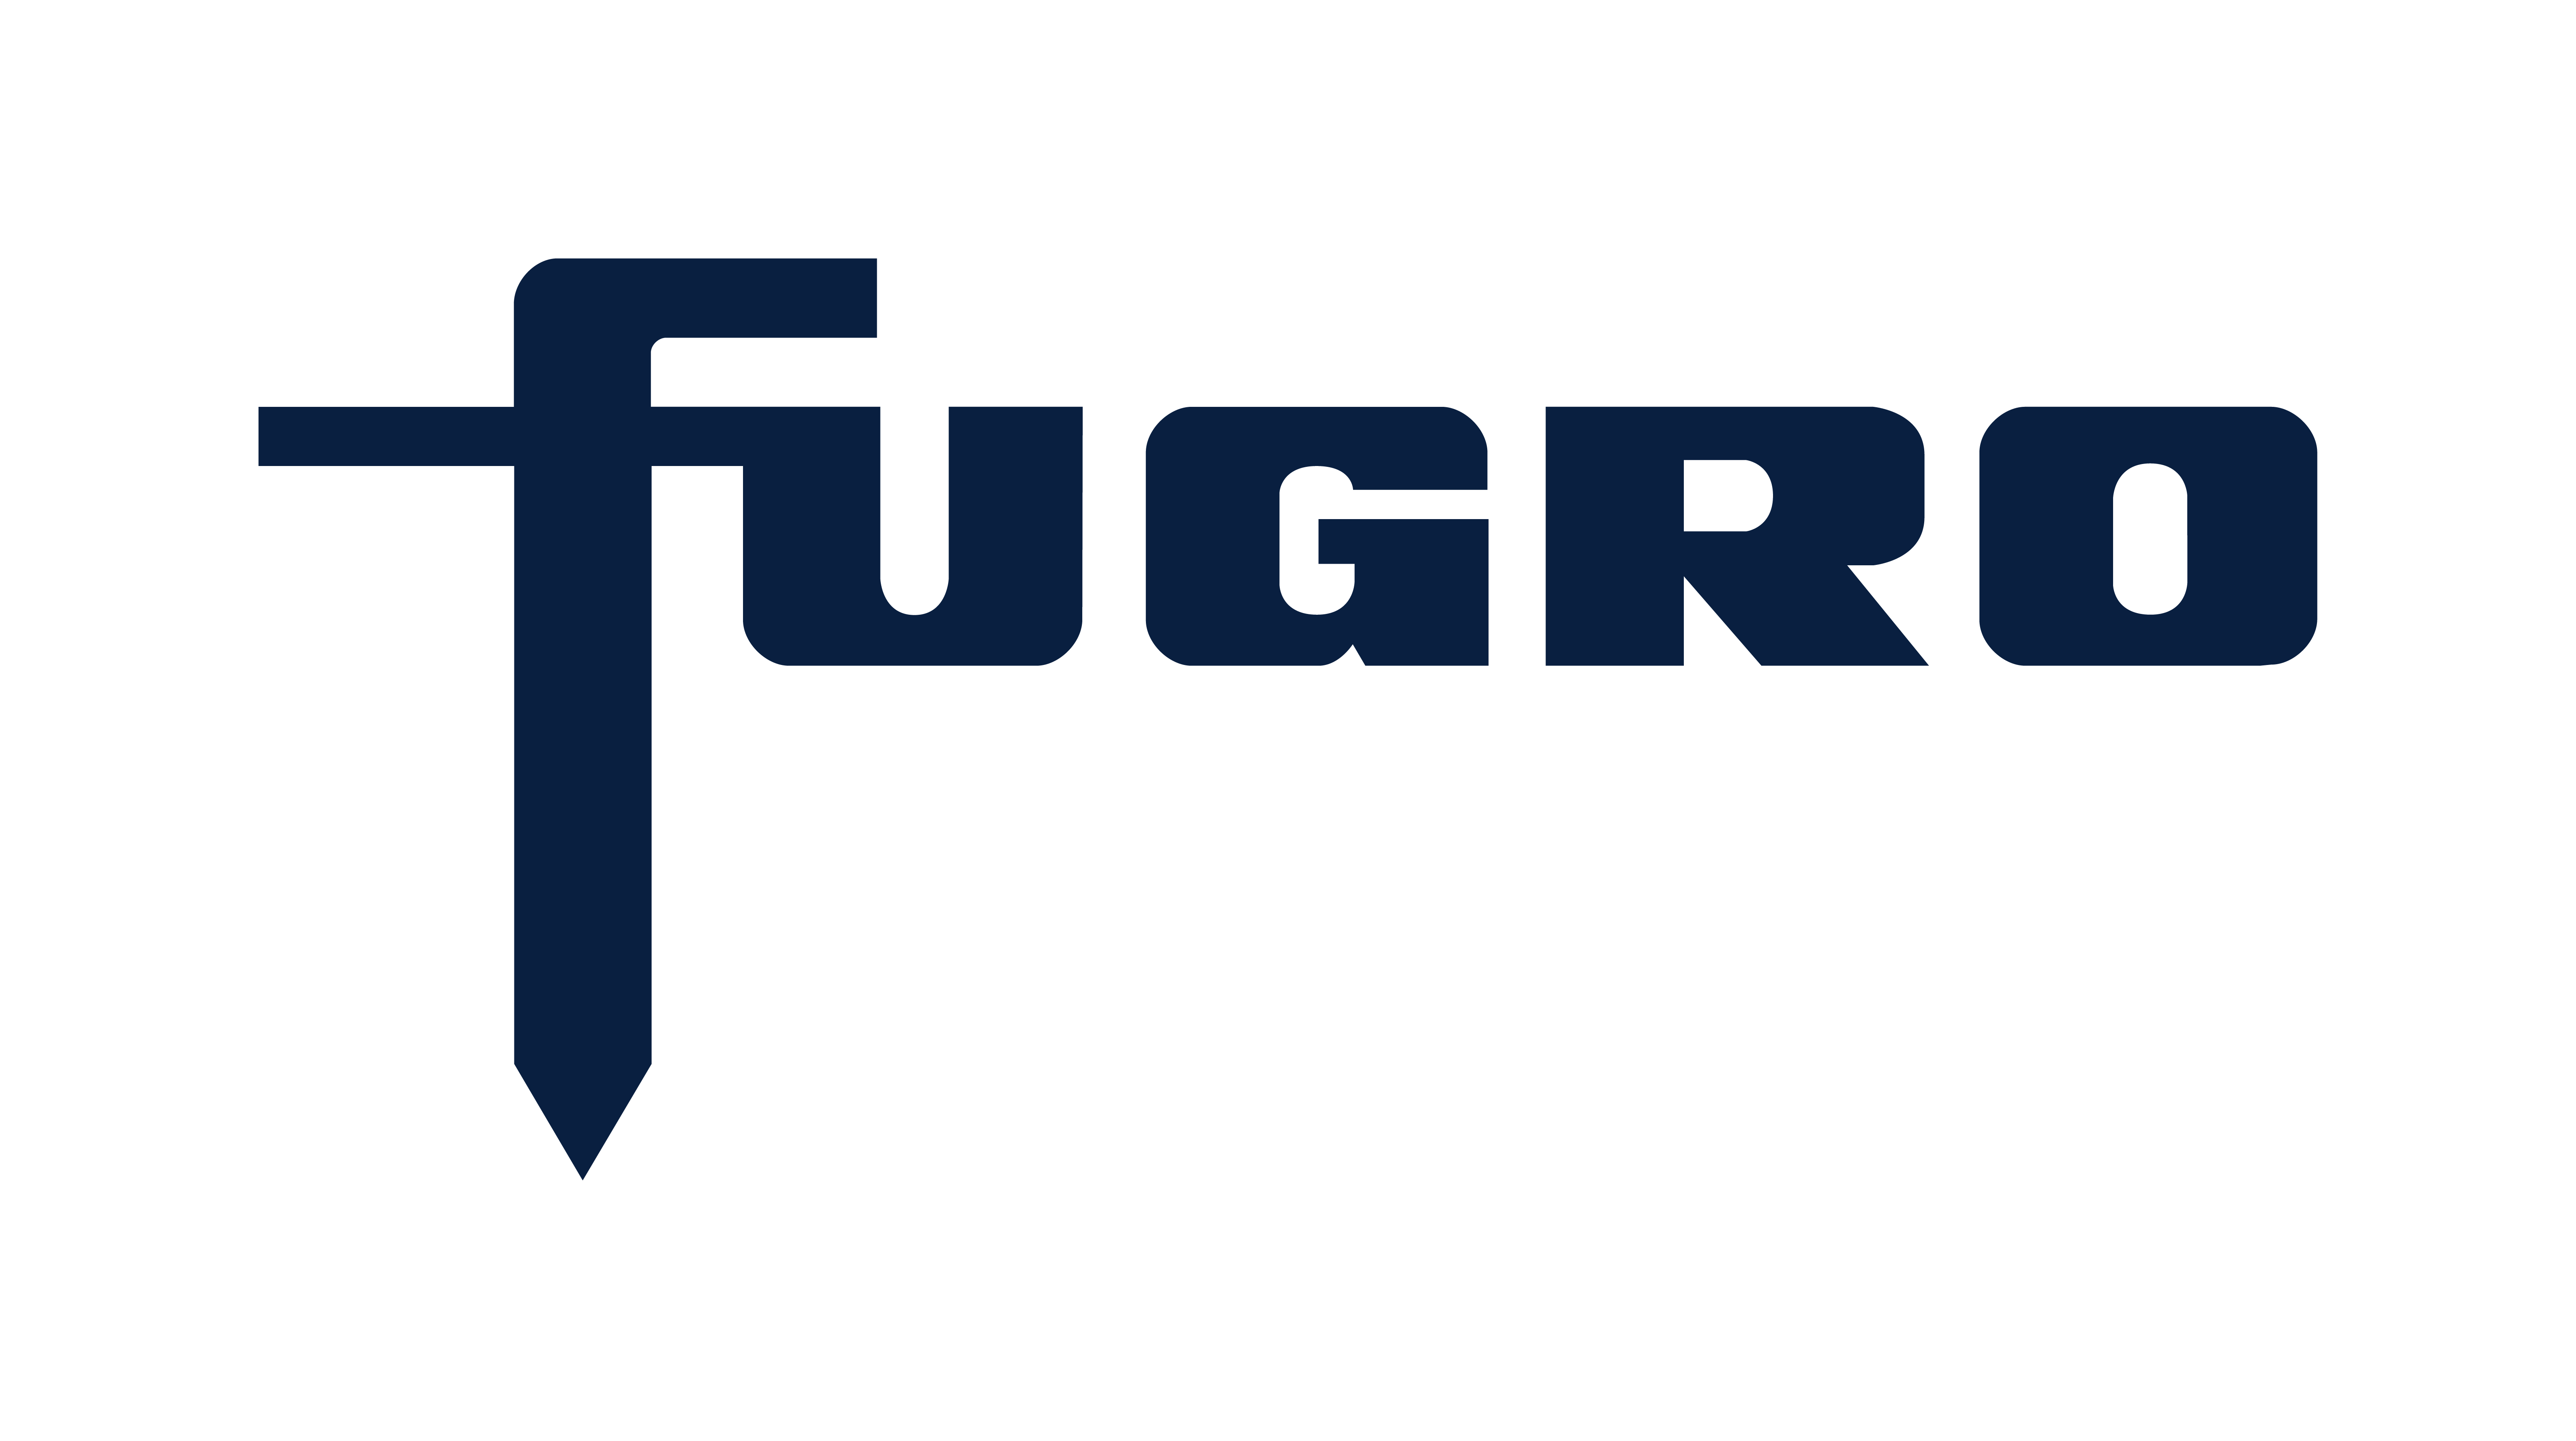 Logotipo de Fugro